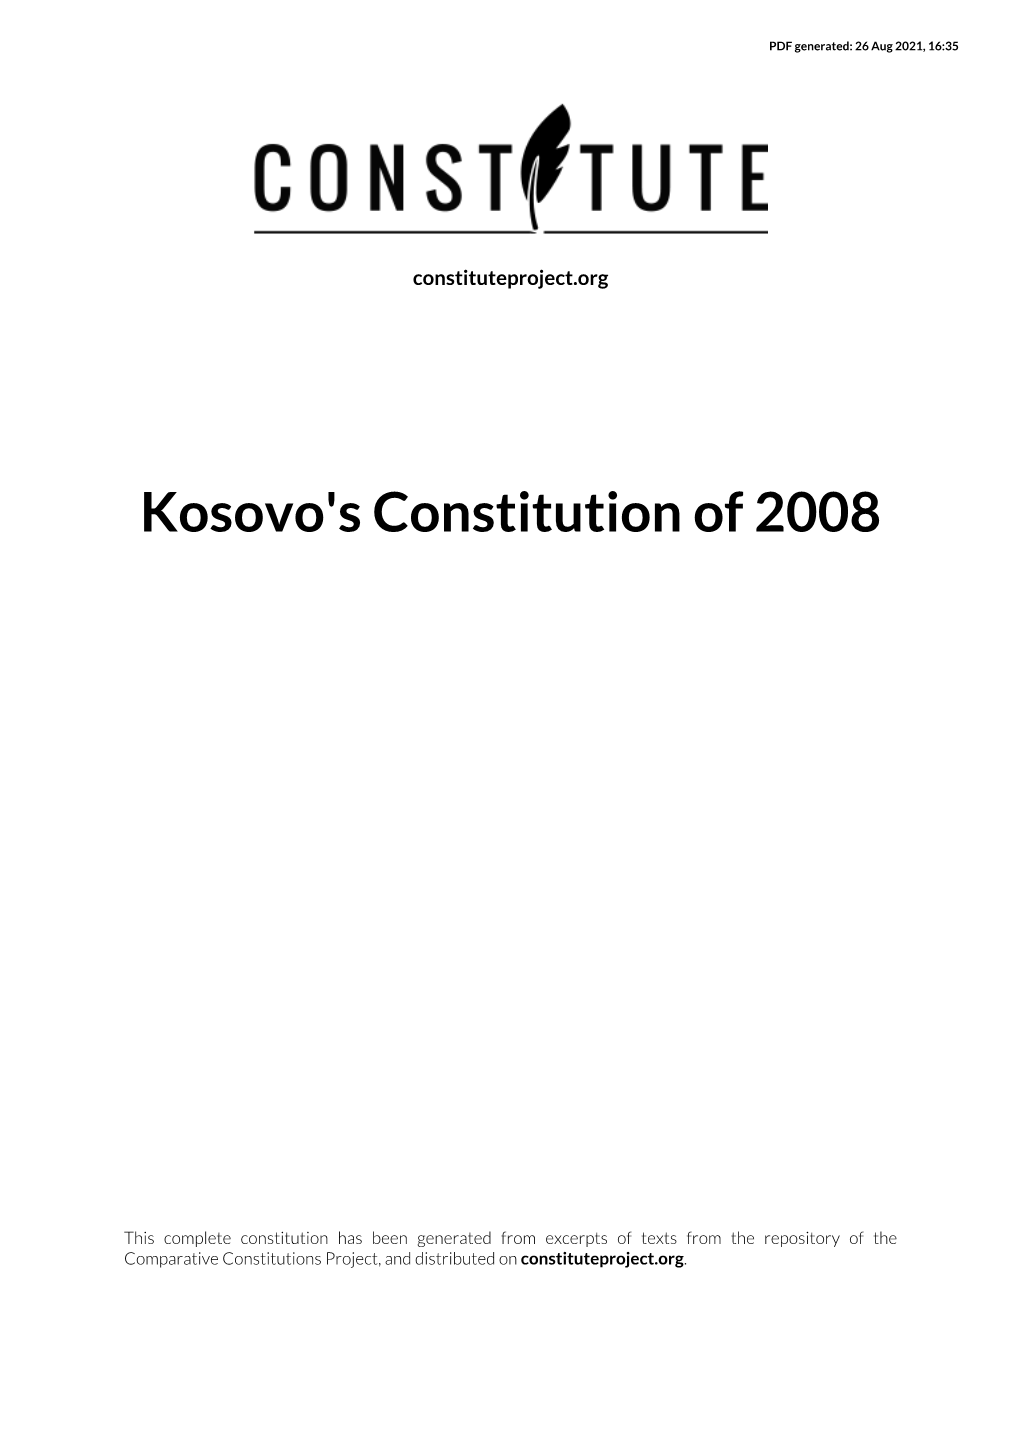 Kosovo's Constitution of 2008